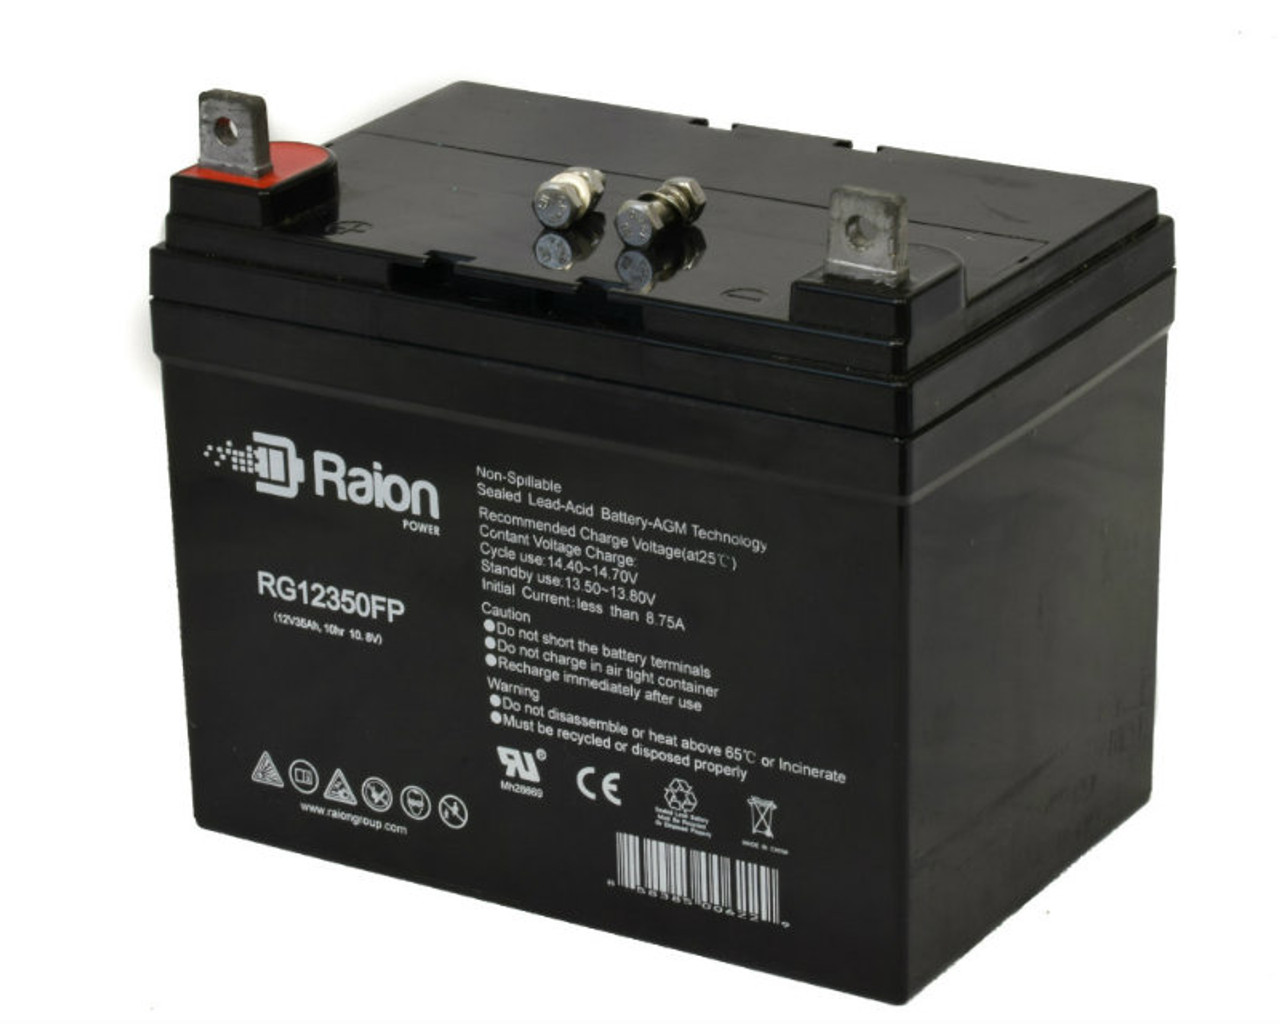 Raion Power Replacement 12V 35Ah RG12350FP Battery for Scag Power Equipment STG-SERIES